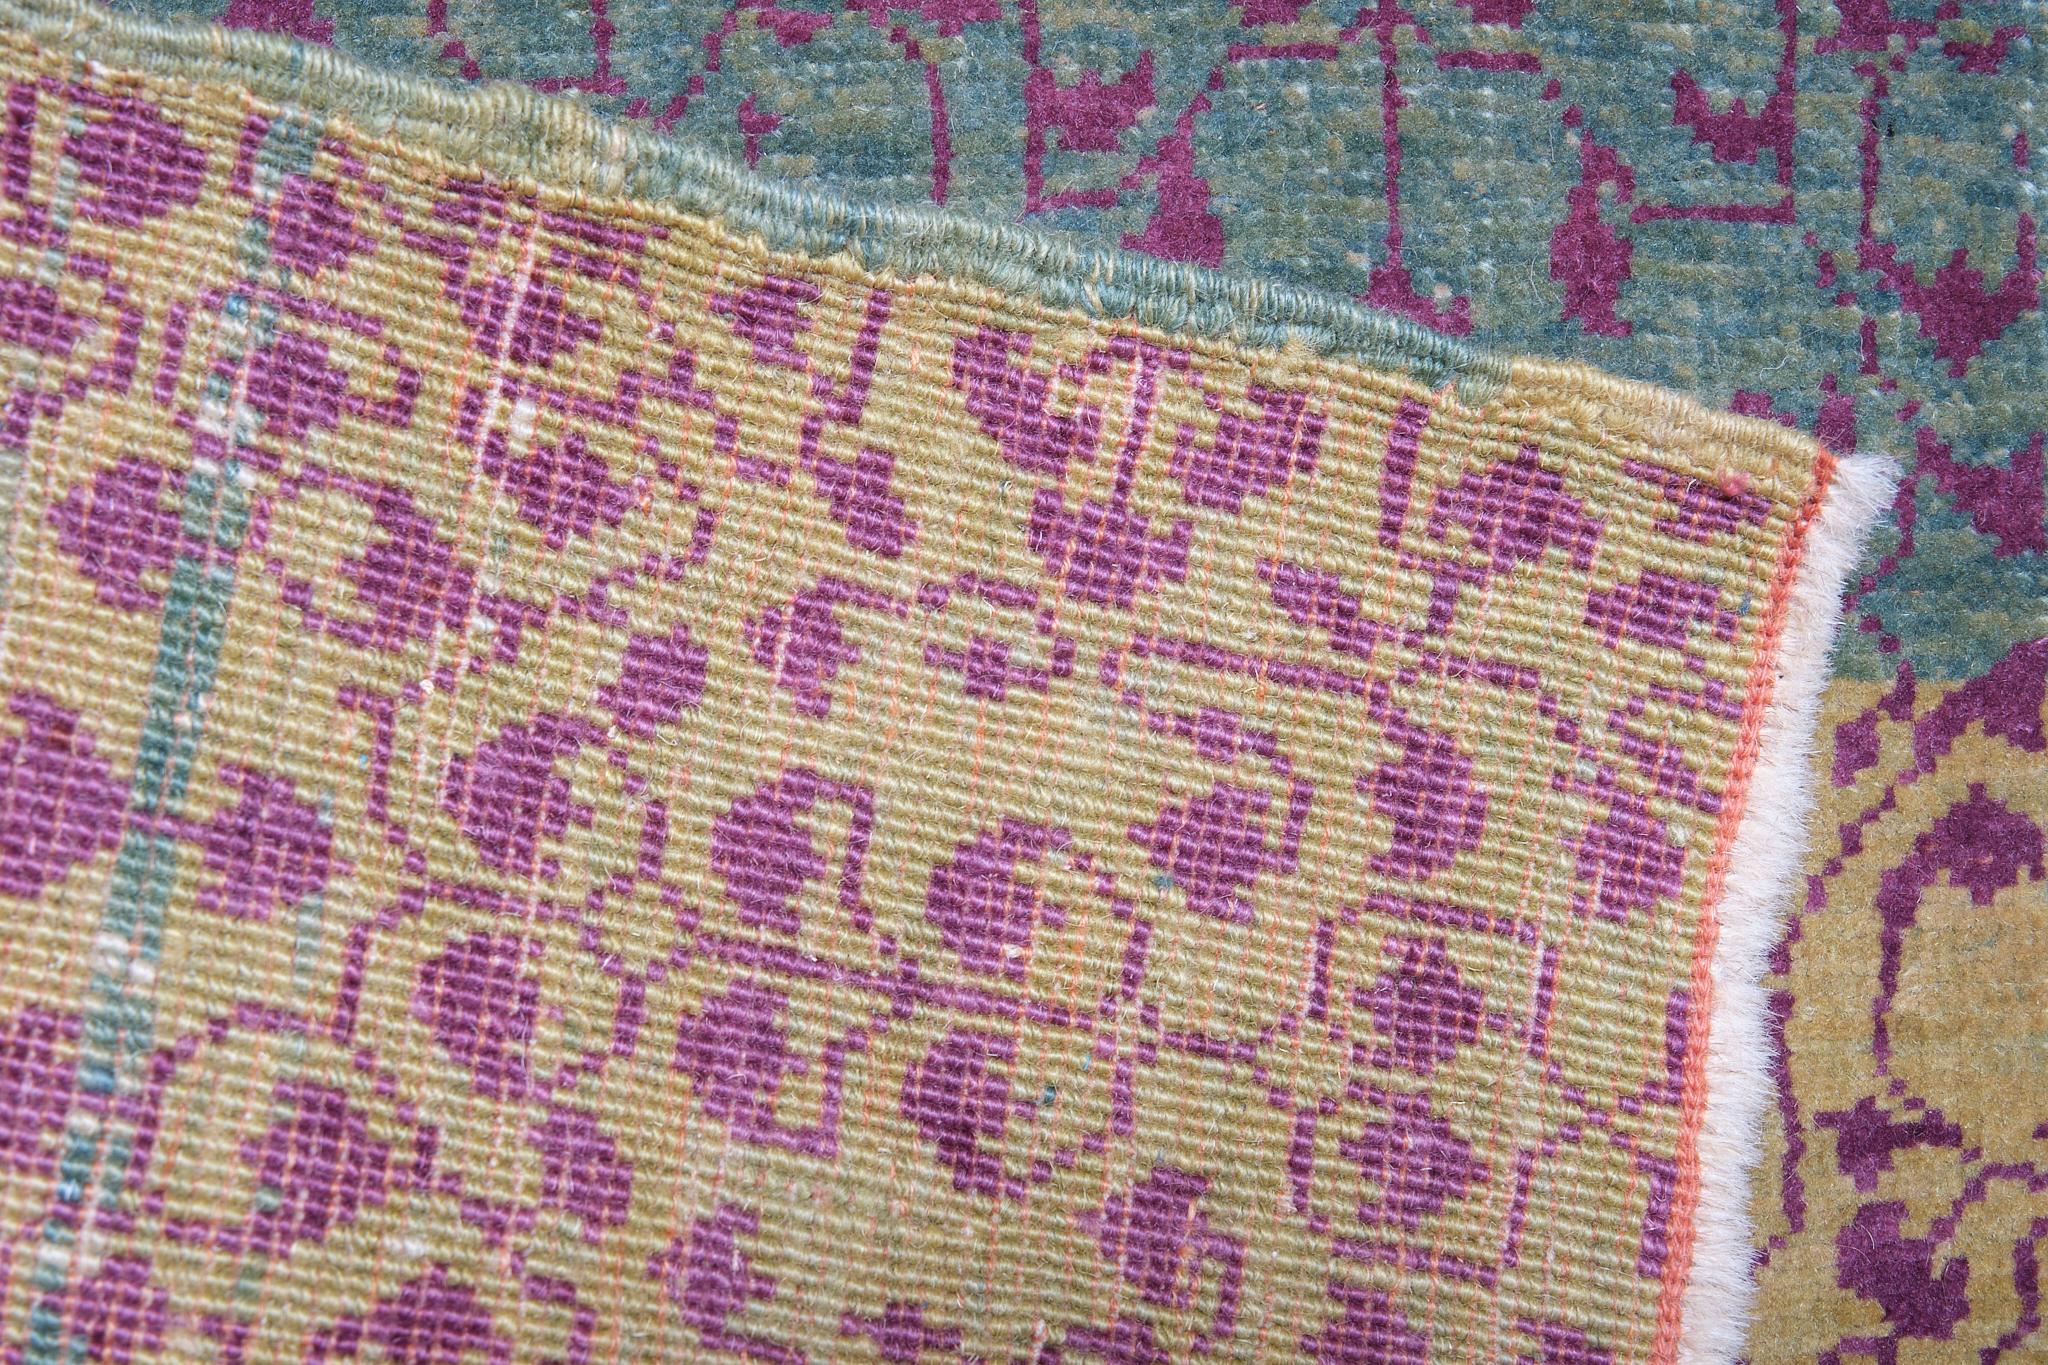 Vegetable Dyed Ararat Rugs Mamluk Wagireh Rug with Leaf Lattice Design, Egypt Revival Carpet For Sale